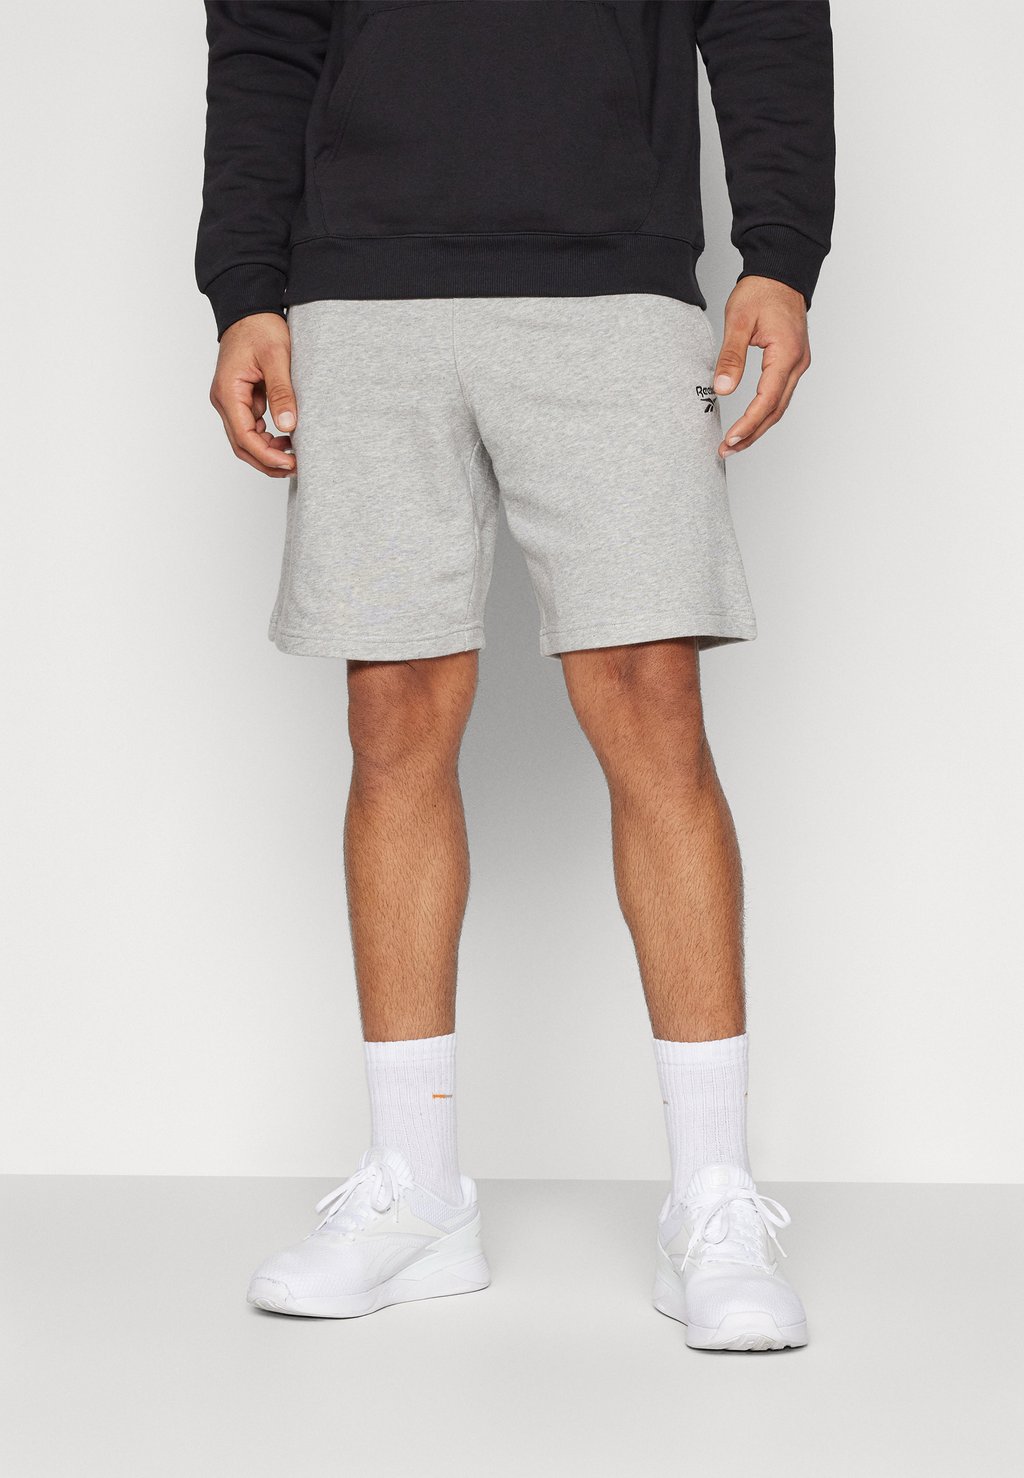 Спортивные шорты Left Leg Short Reebok, цвет mgreyh брюки жен ha6612 adidas studio pt mgreyh white размер m